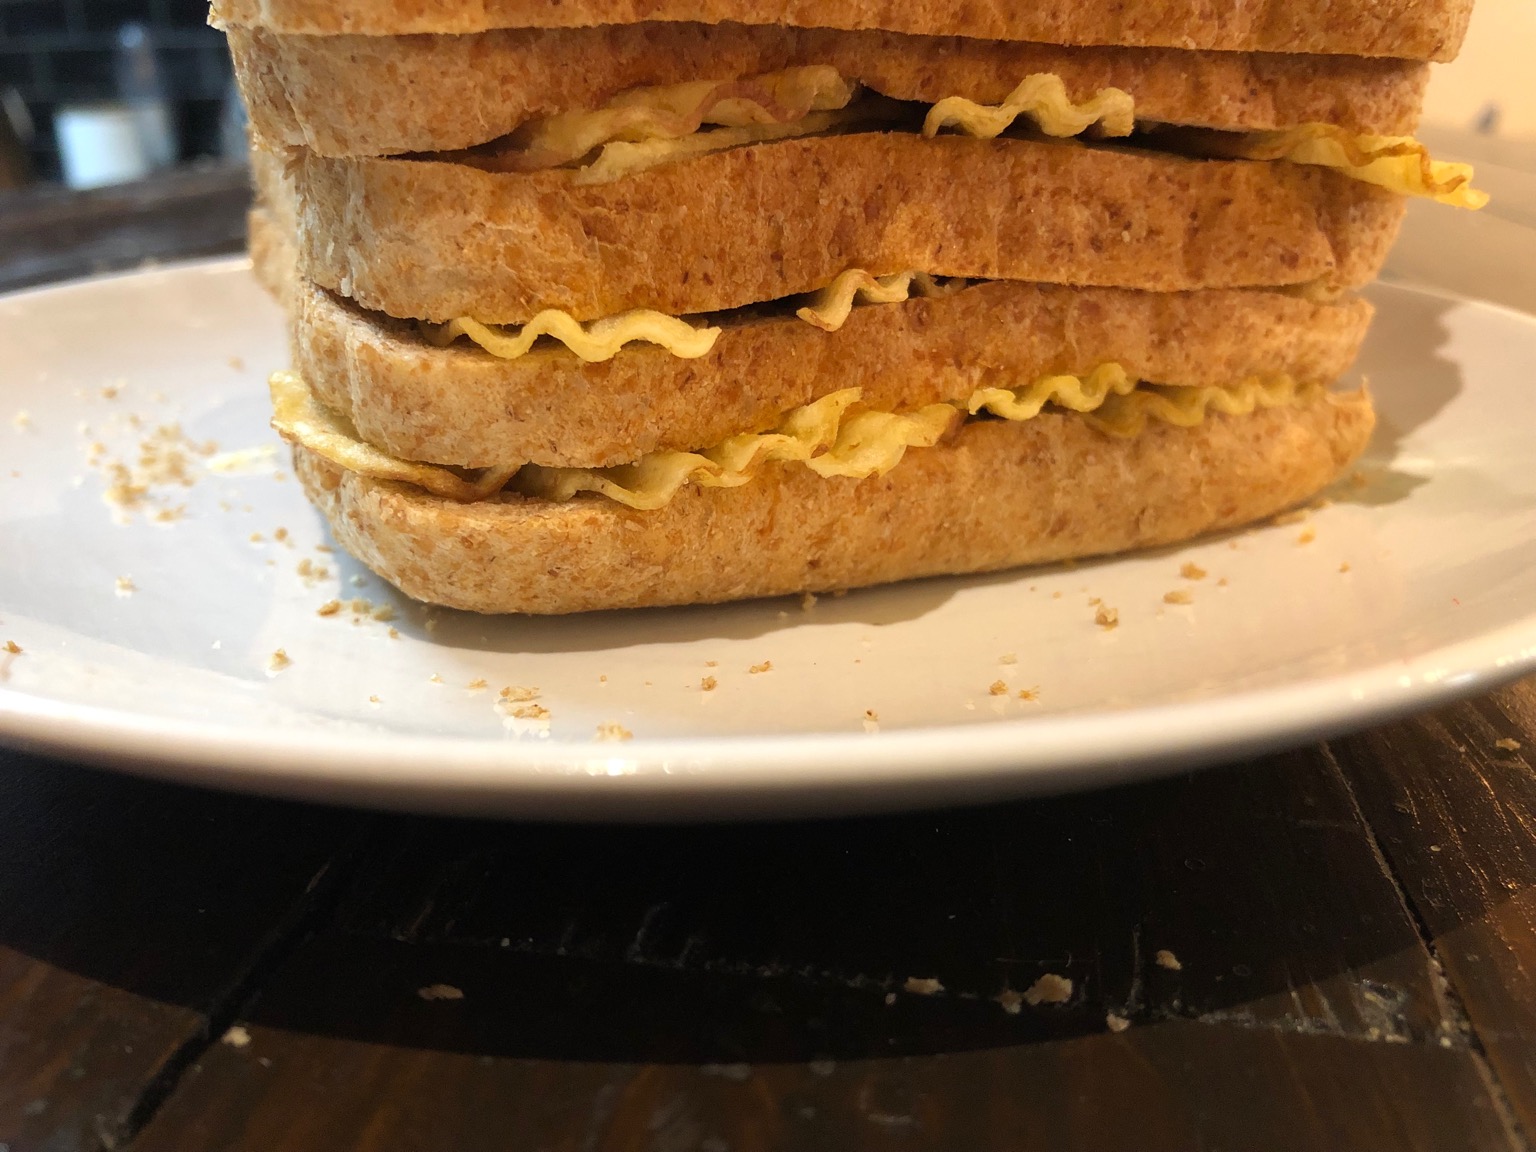 Bottom of huge brown crisp sandwich